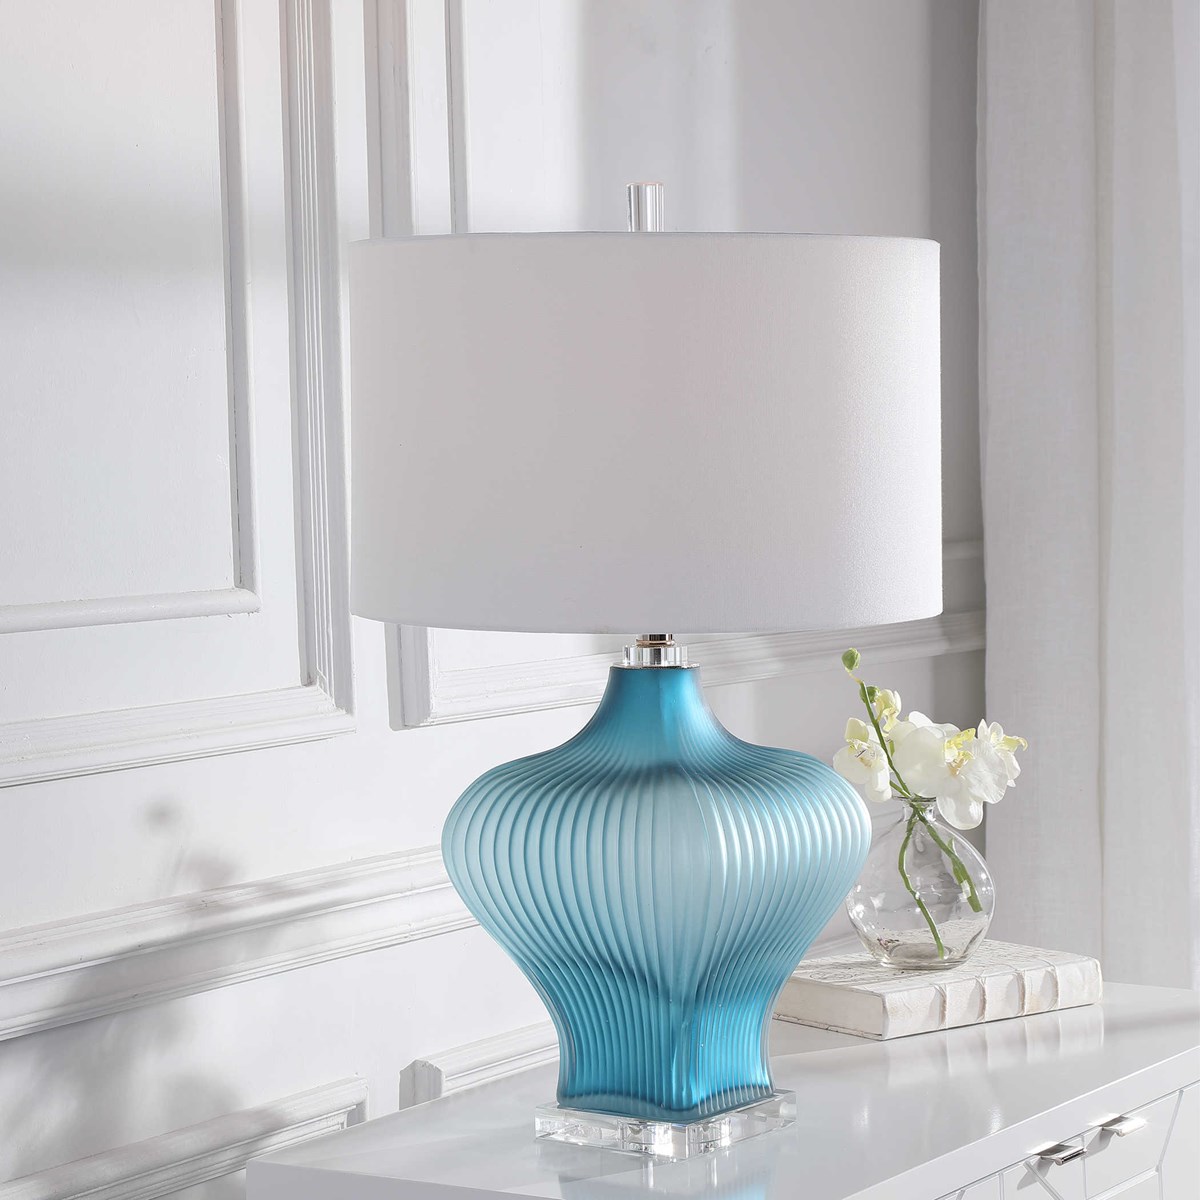 Blue modern lamp for bedroom interior design